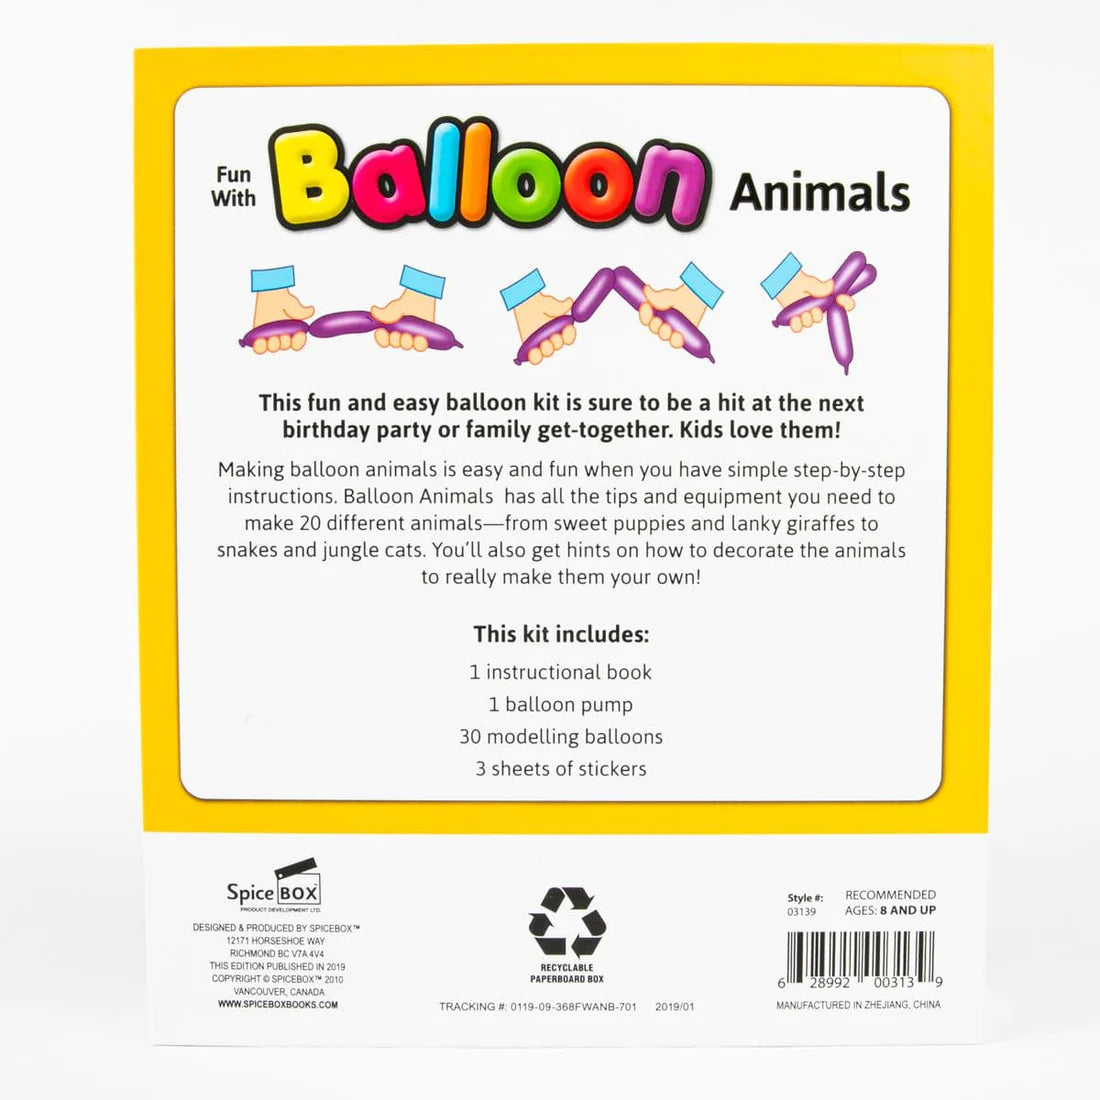 Spicebox Fun With Balloon Animals